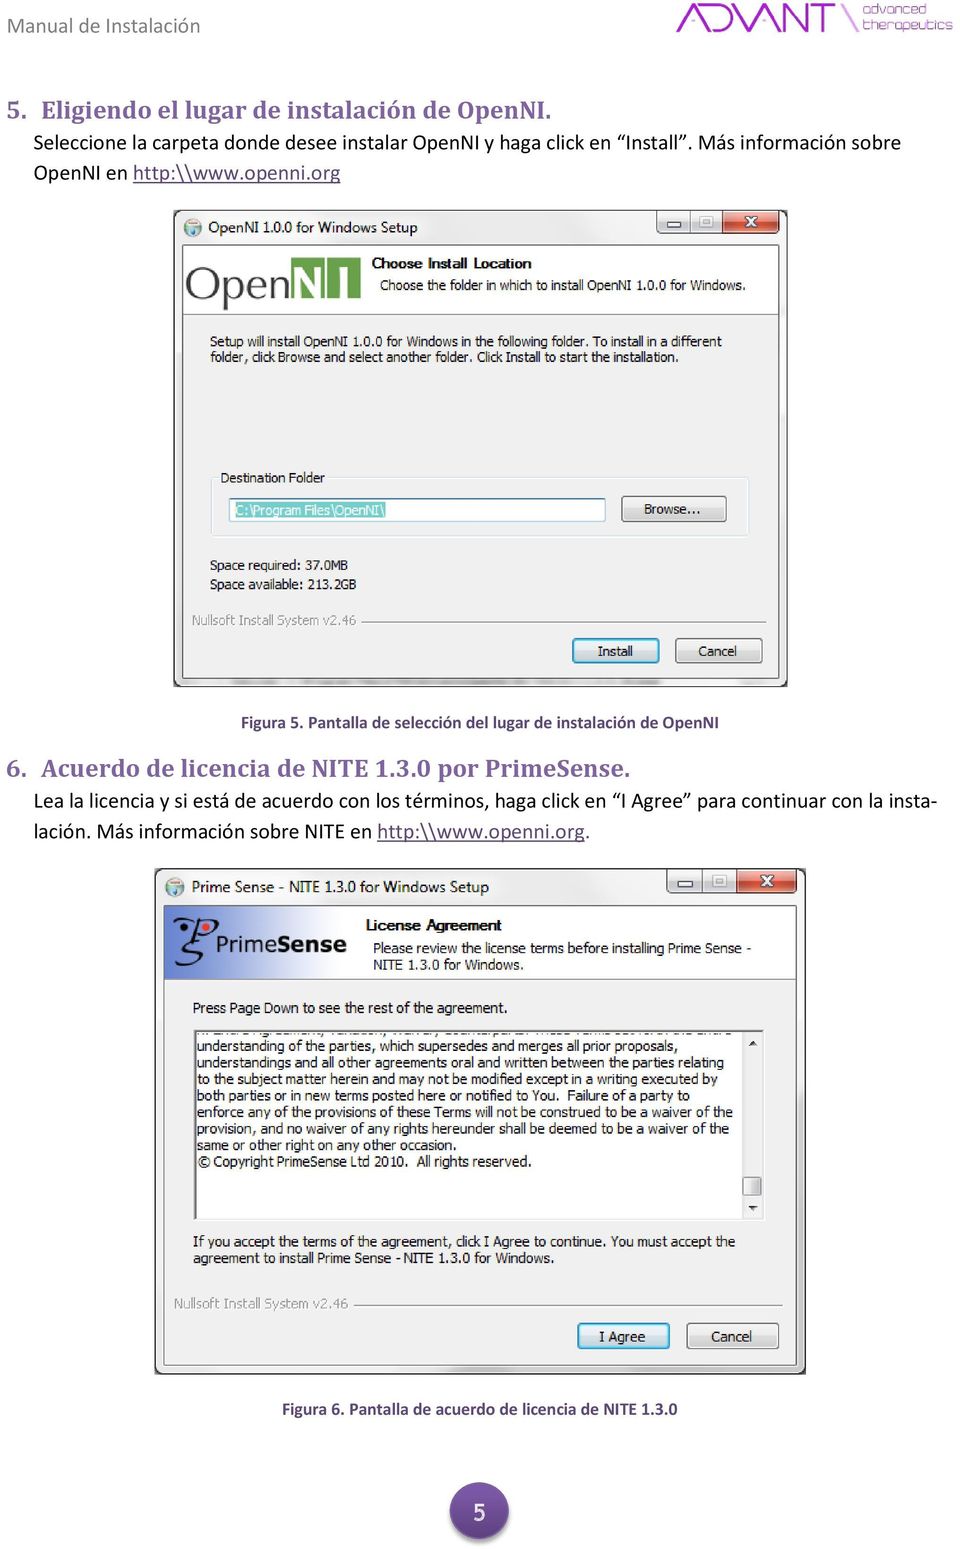 Acuerdo de licencia de NITE 1.3.0 por PrimeSense.